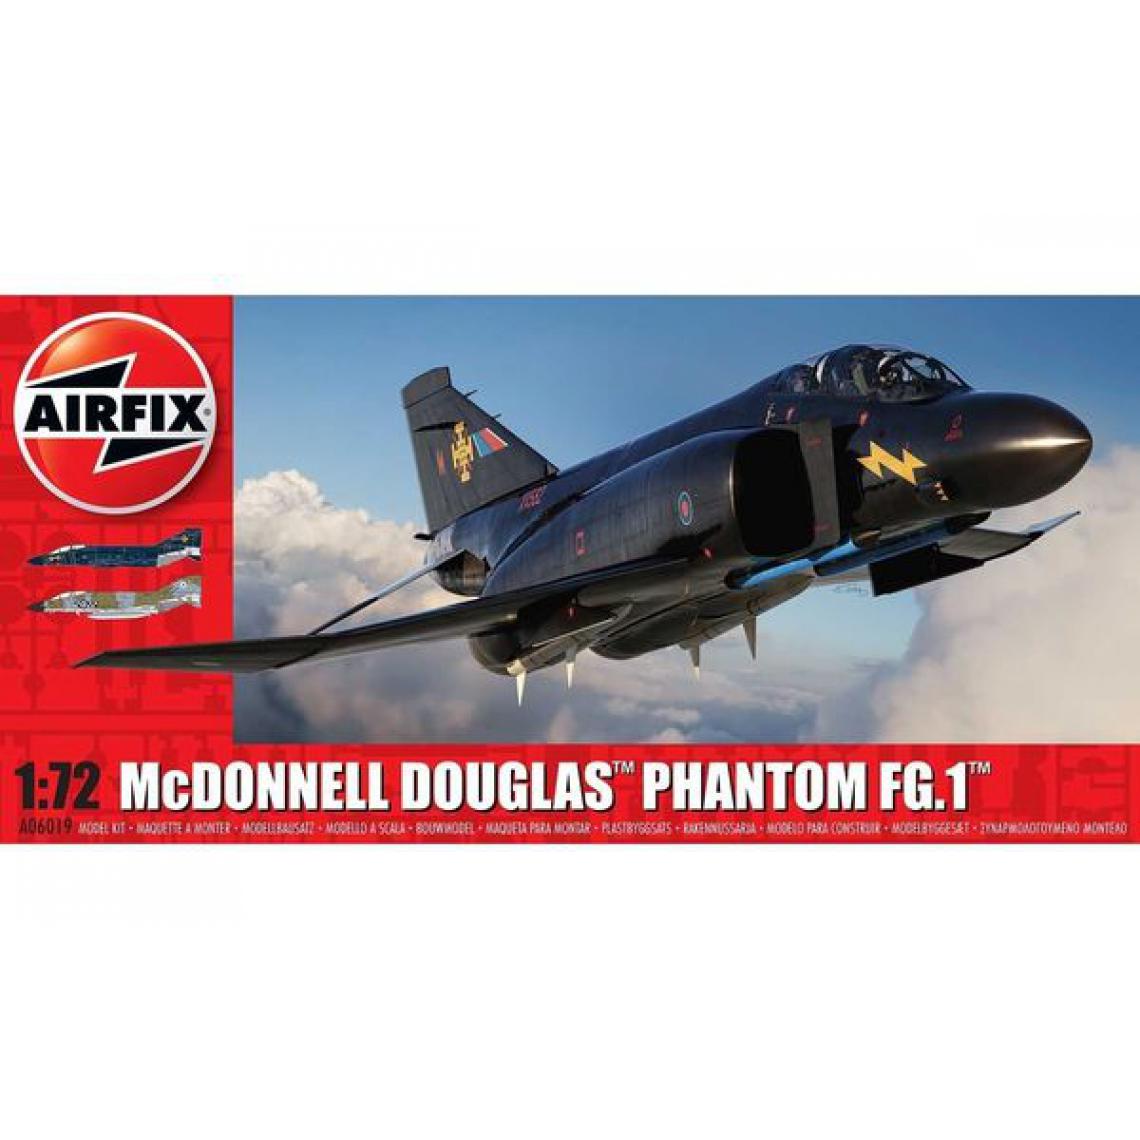 Airfix - McDonnell Douglas FG.1 Phantom-RAF - 1:72e - Airfix - Avions RC